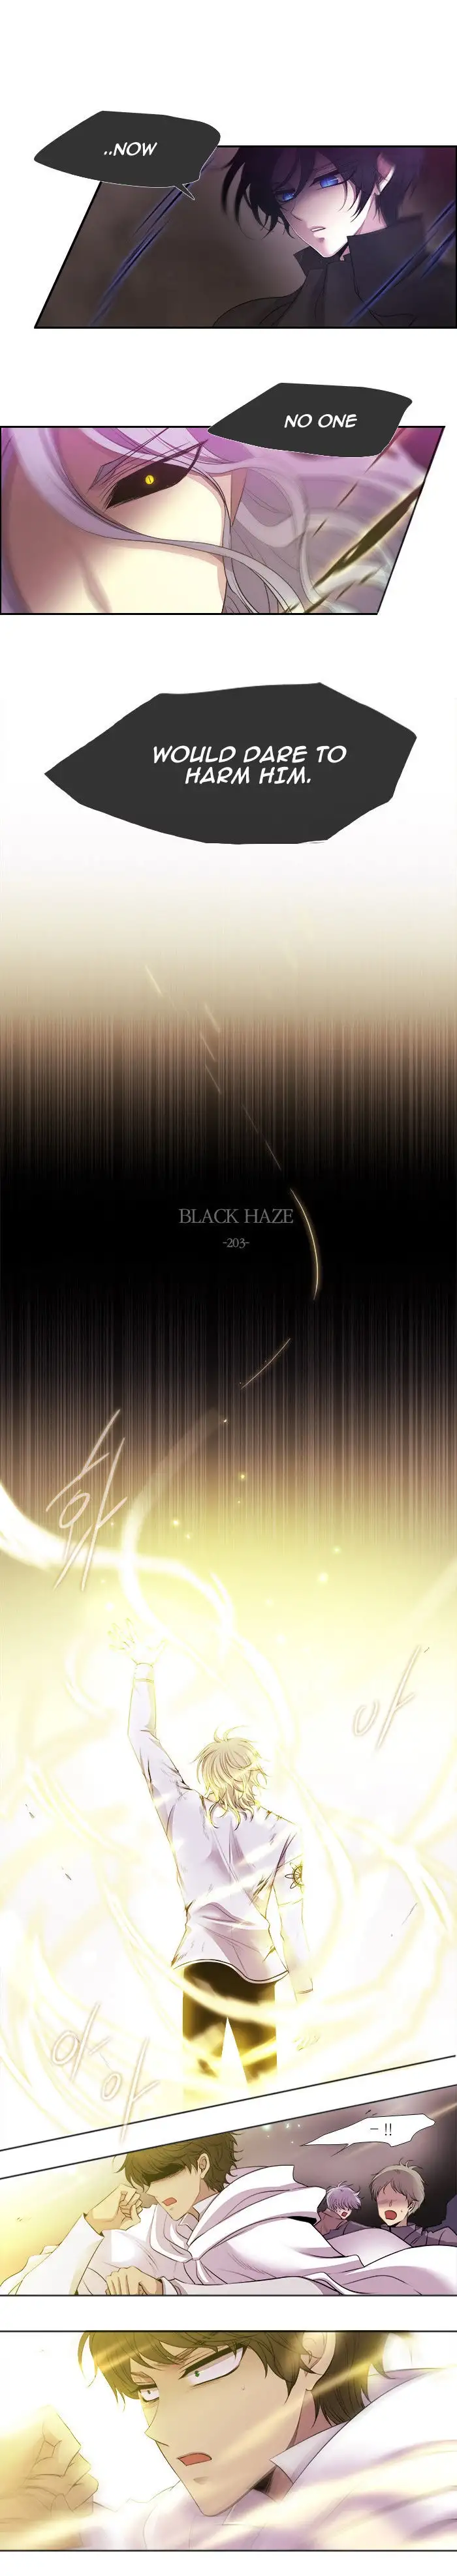 Black Haze - Chapter 203 Page 1